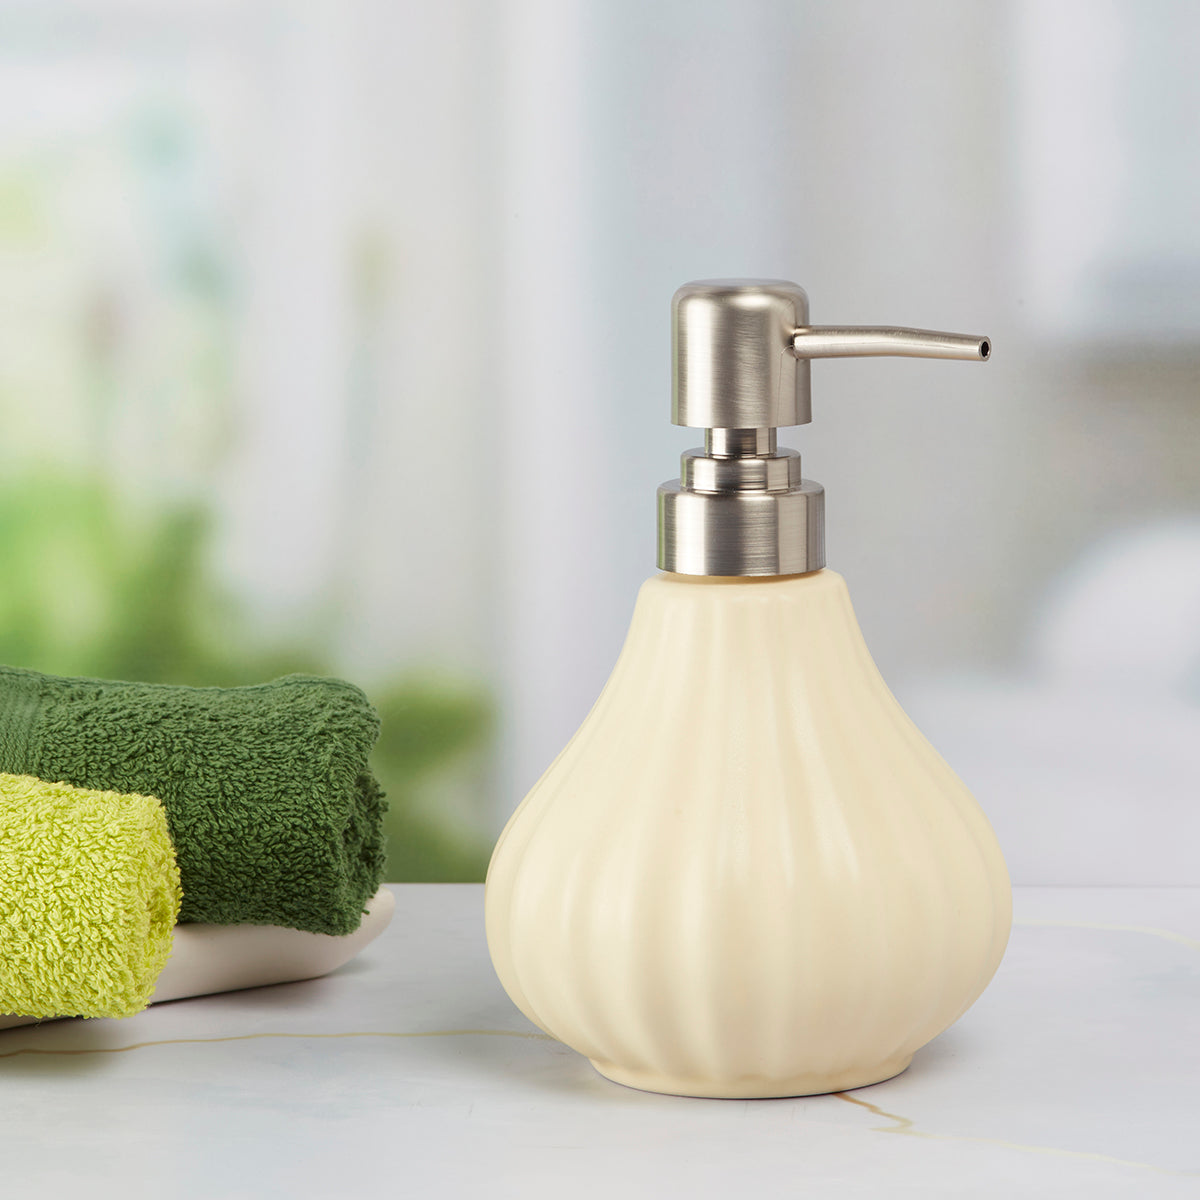 Ceramic Soap Dispenser handwash Pump for Bathroom, Set of 1, Brown (8647)